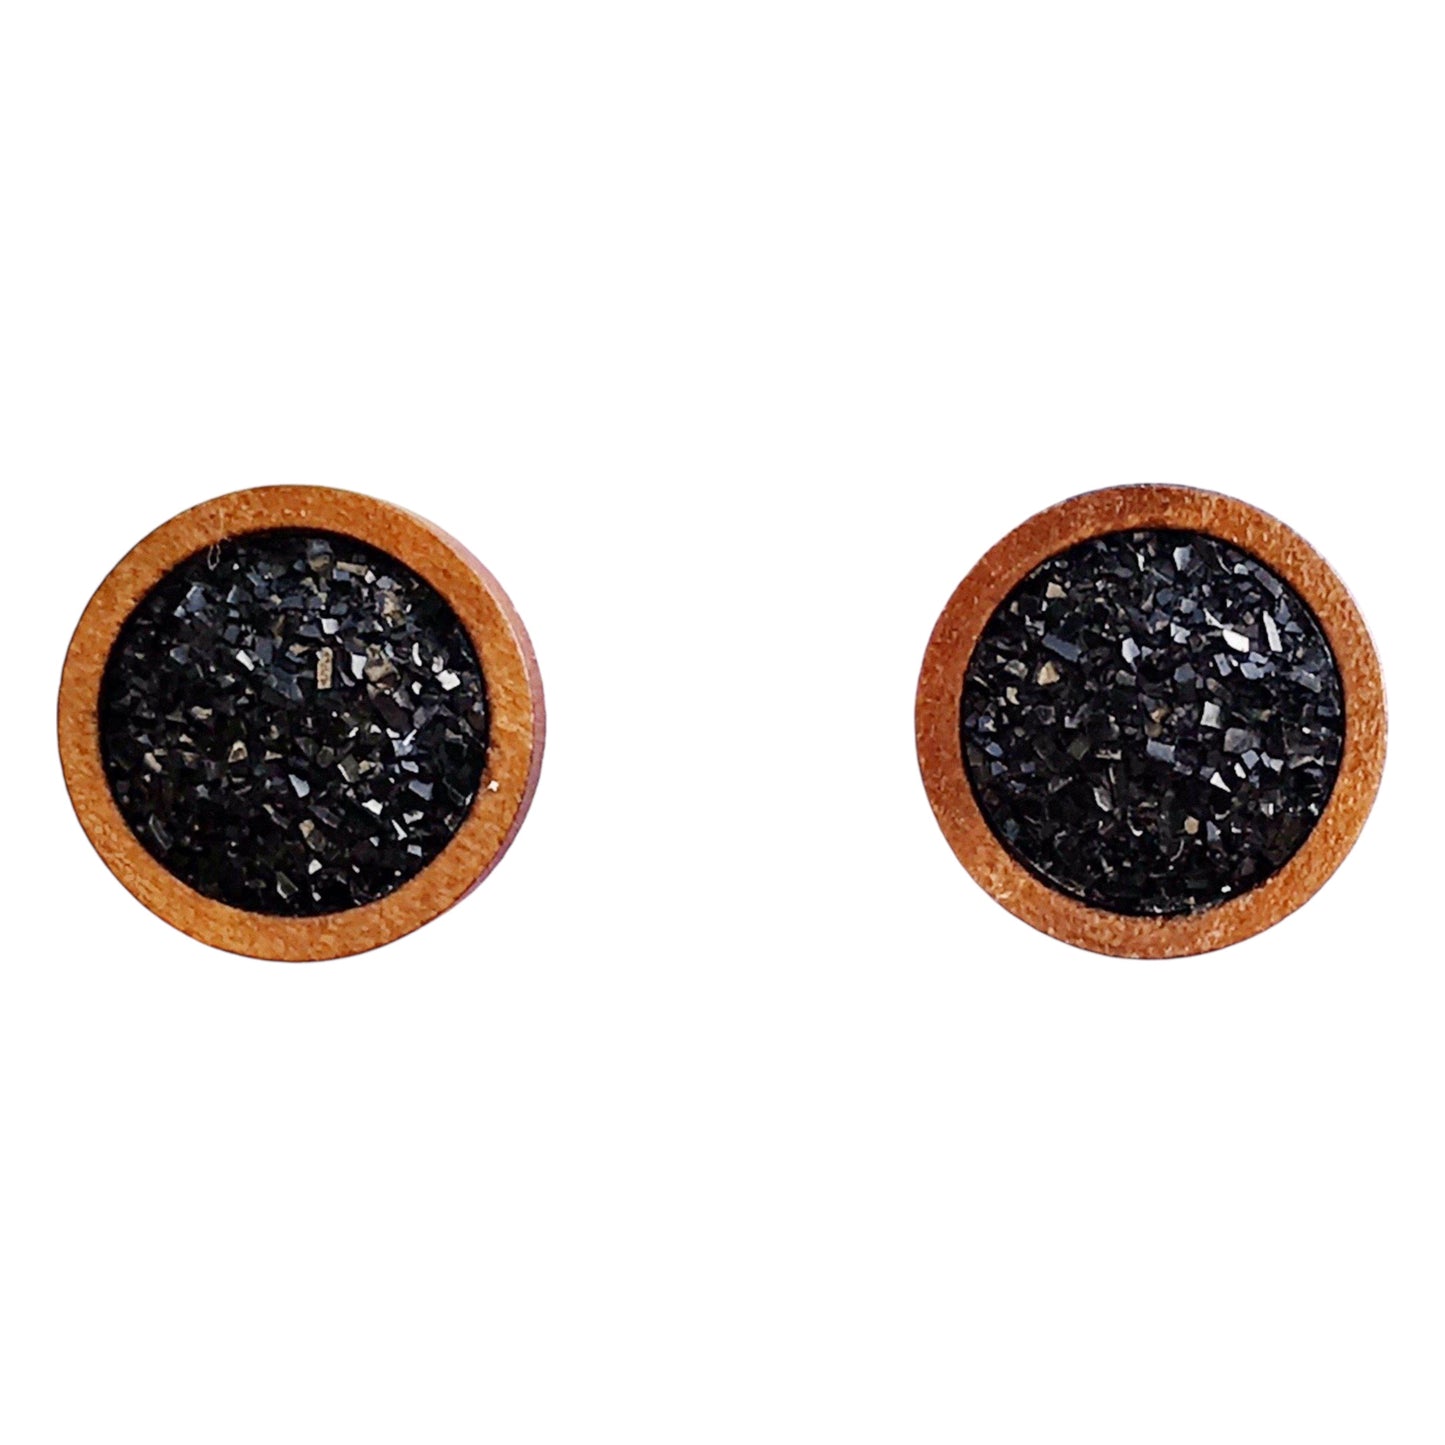 Black Druzy Wood Stud Earrings - Boho Chic Design -Statement Jewelry for Minimalist Style